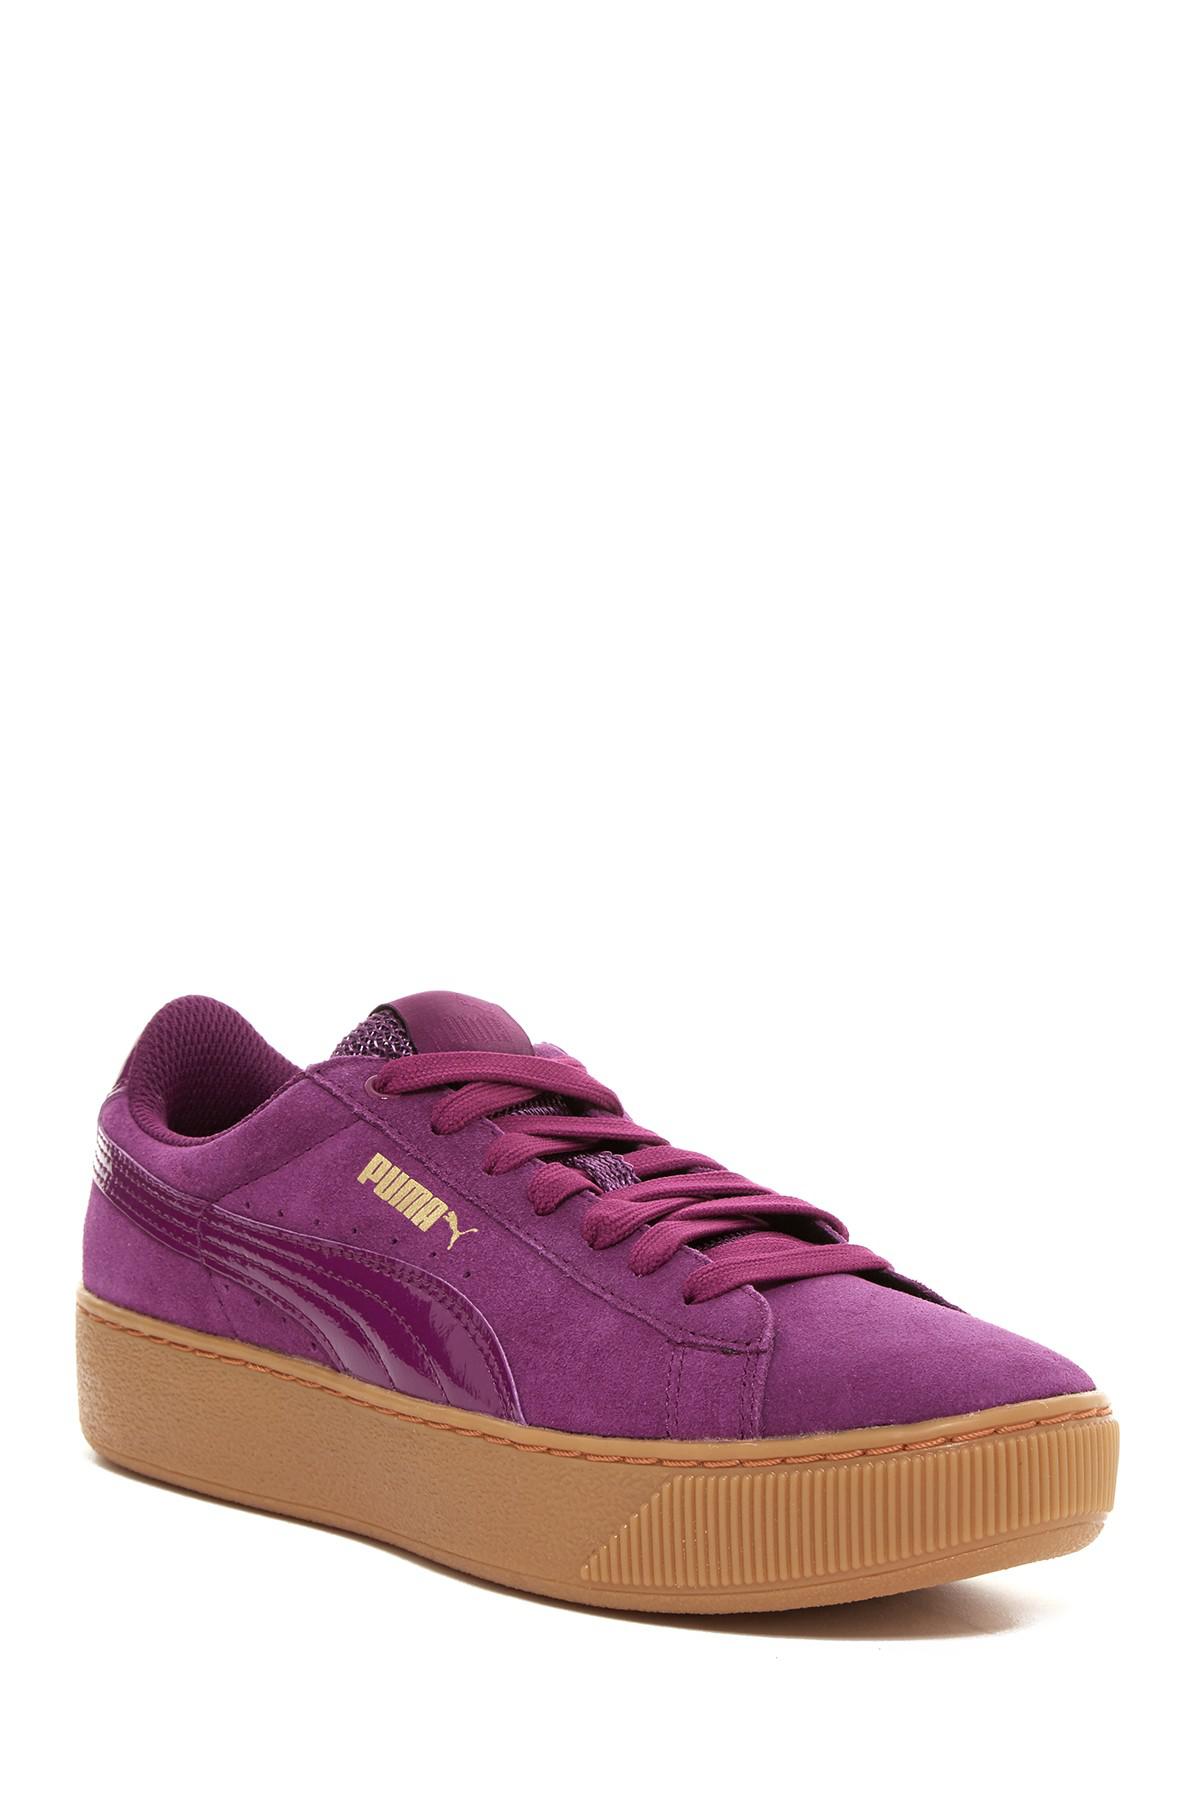 PUMA Suede Vikky Platform Sneaker in Purple - Lyst